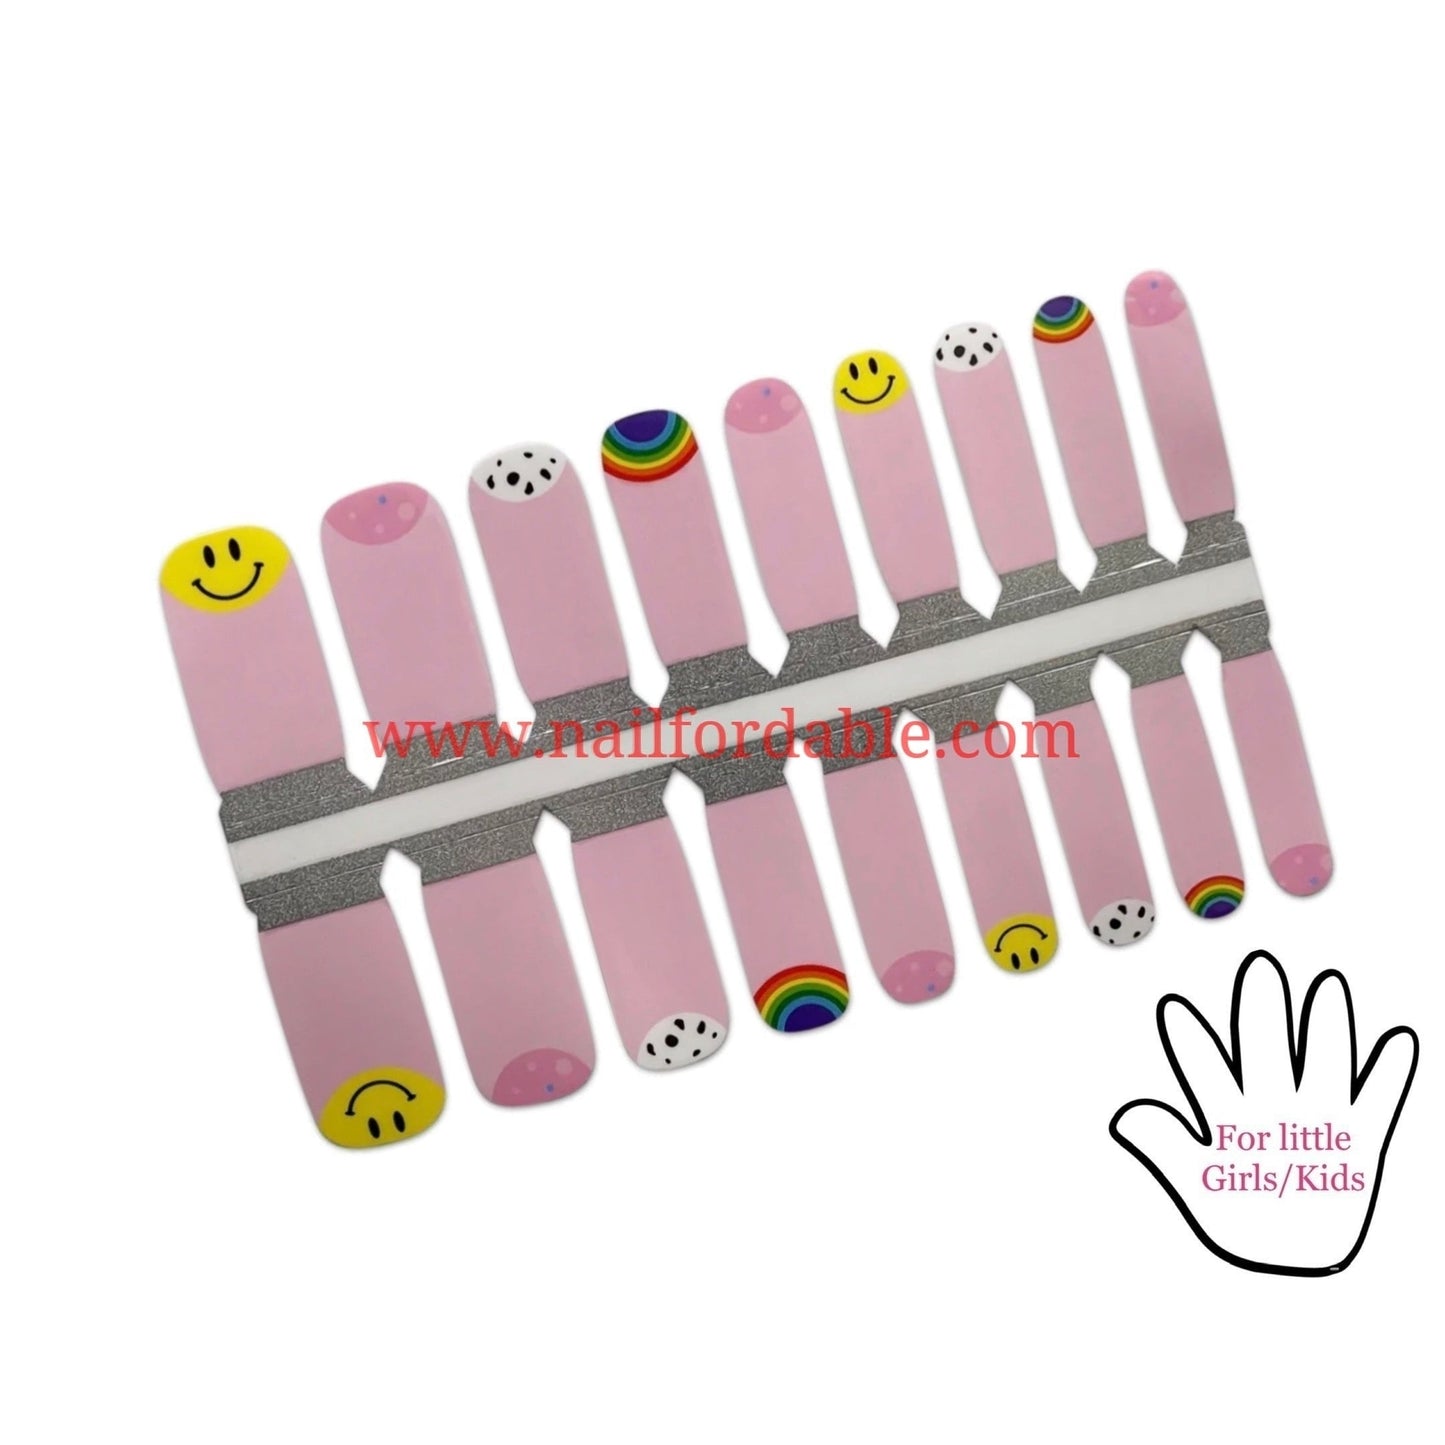 Smile Nail Wraps | Semi Cured Gel Wraps | Gel Nail Wraps |Nail Polish | Nail Stickers